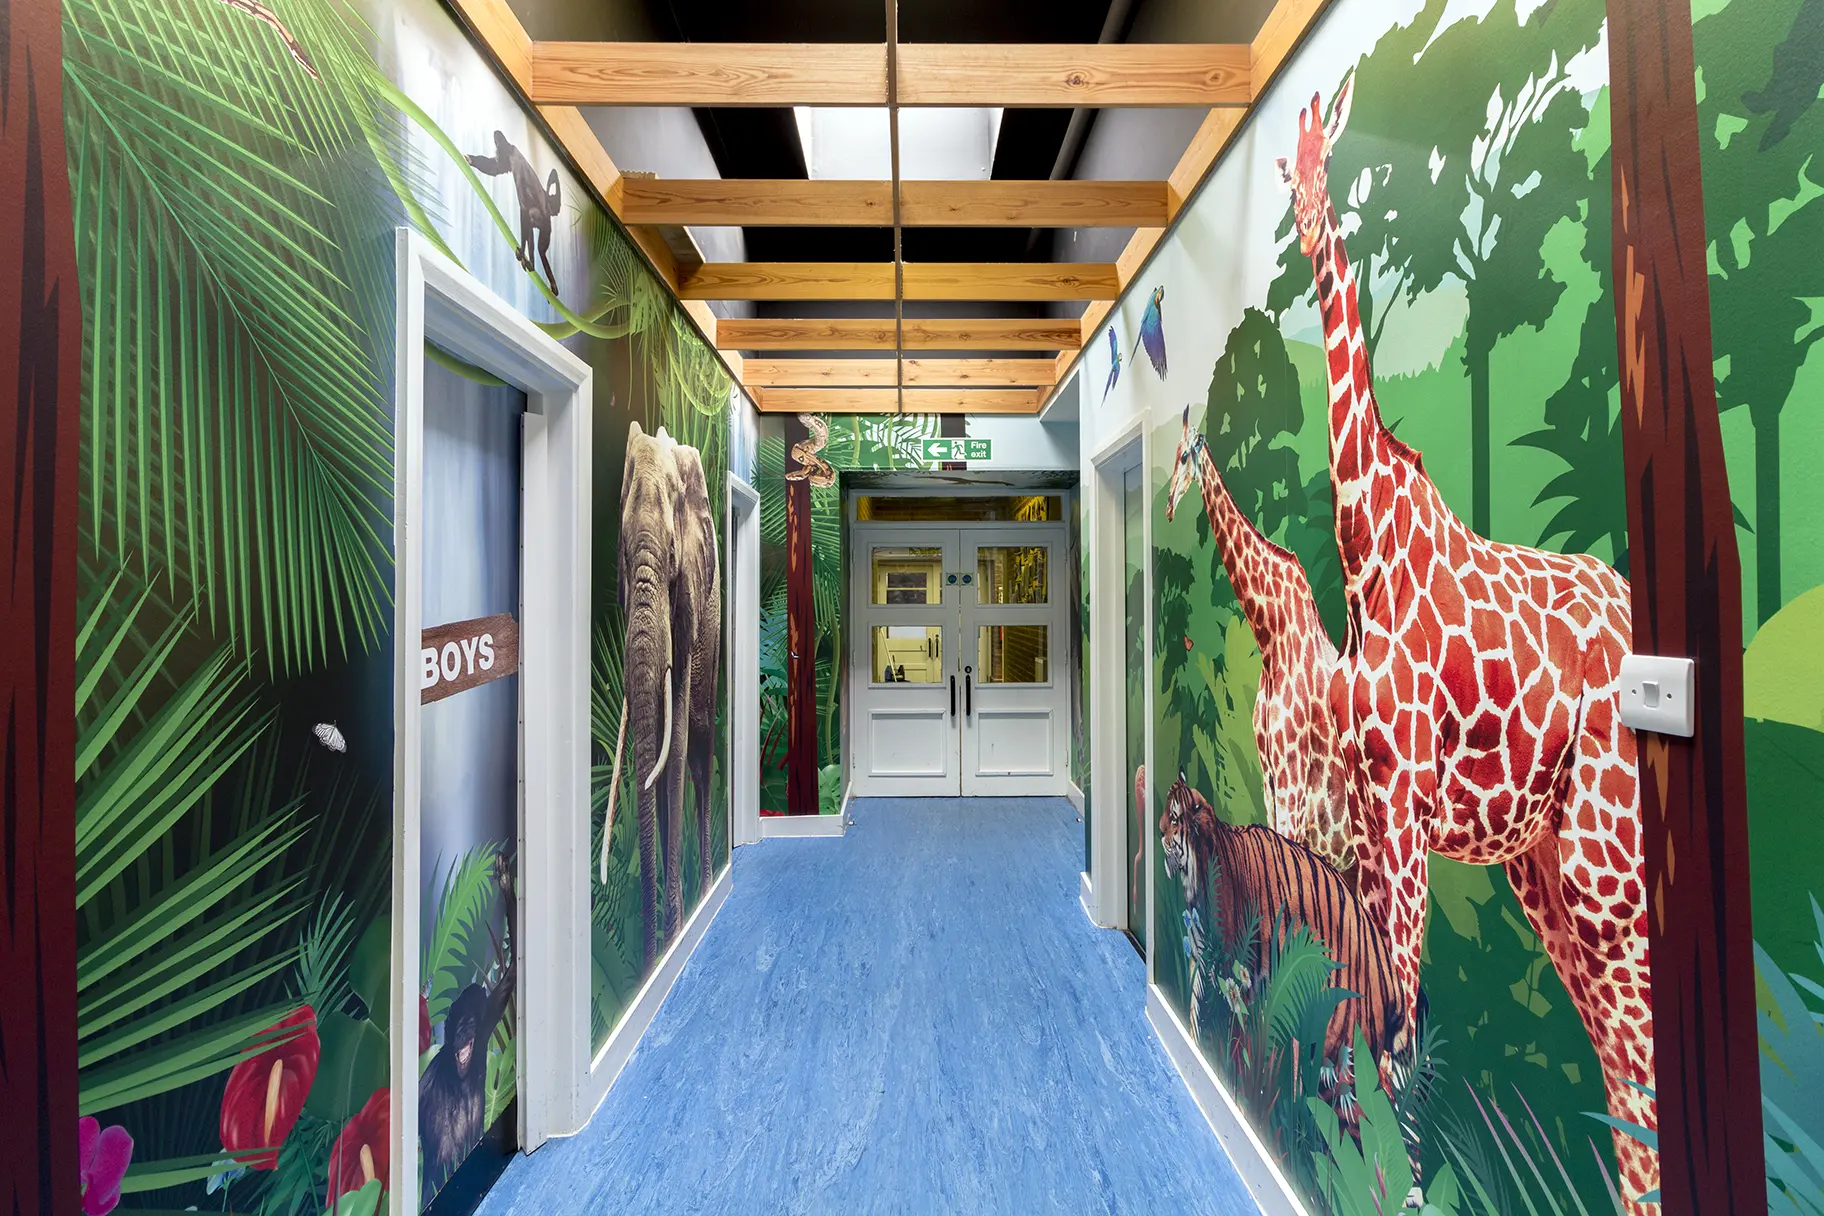 Mottingham Primary School immersive wrap around themed corridor wall art